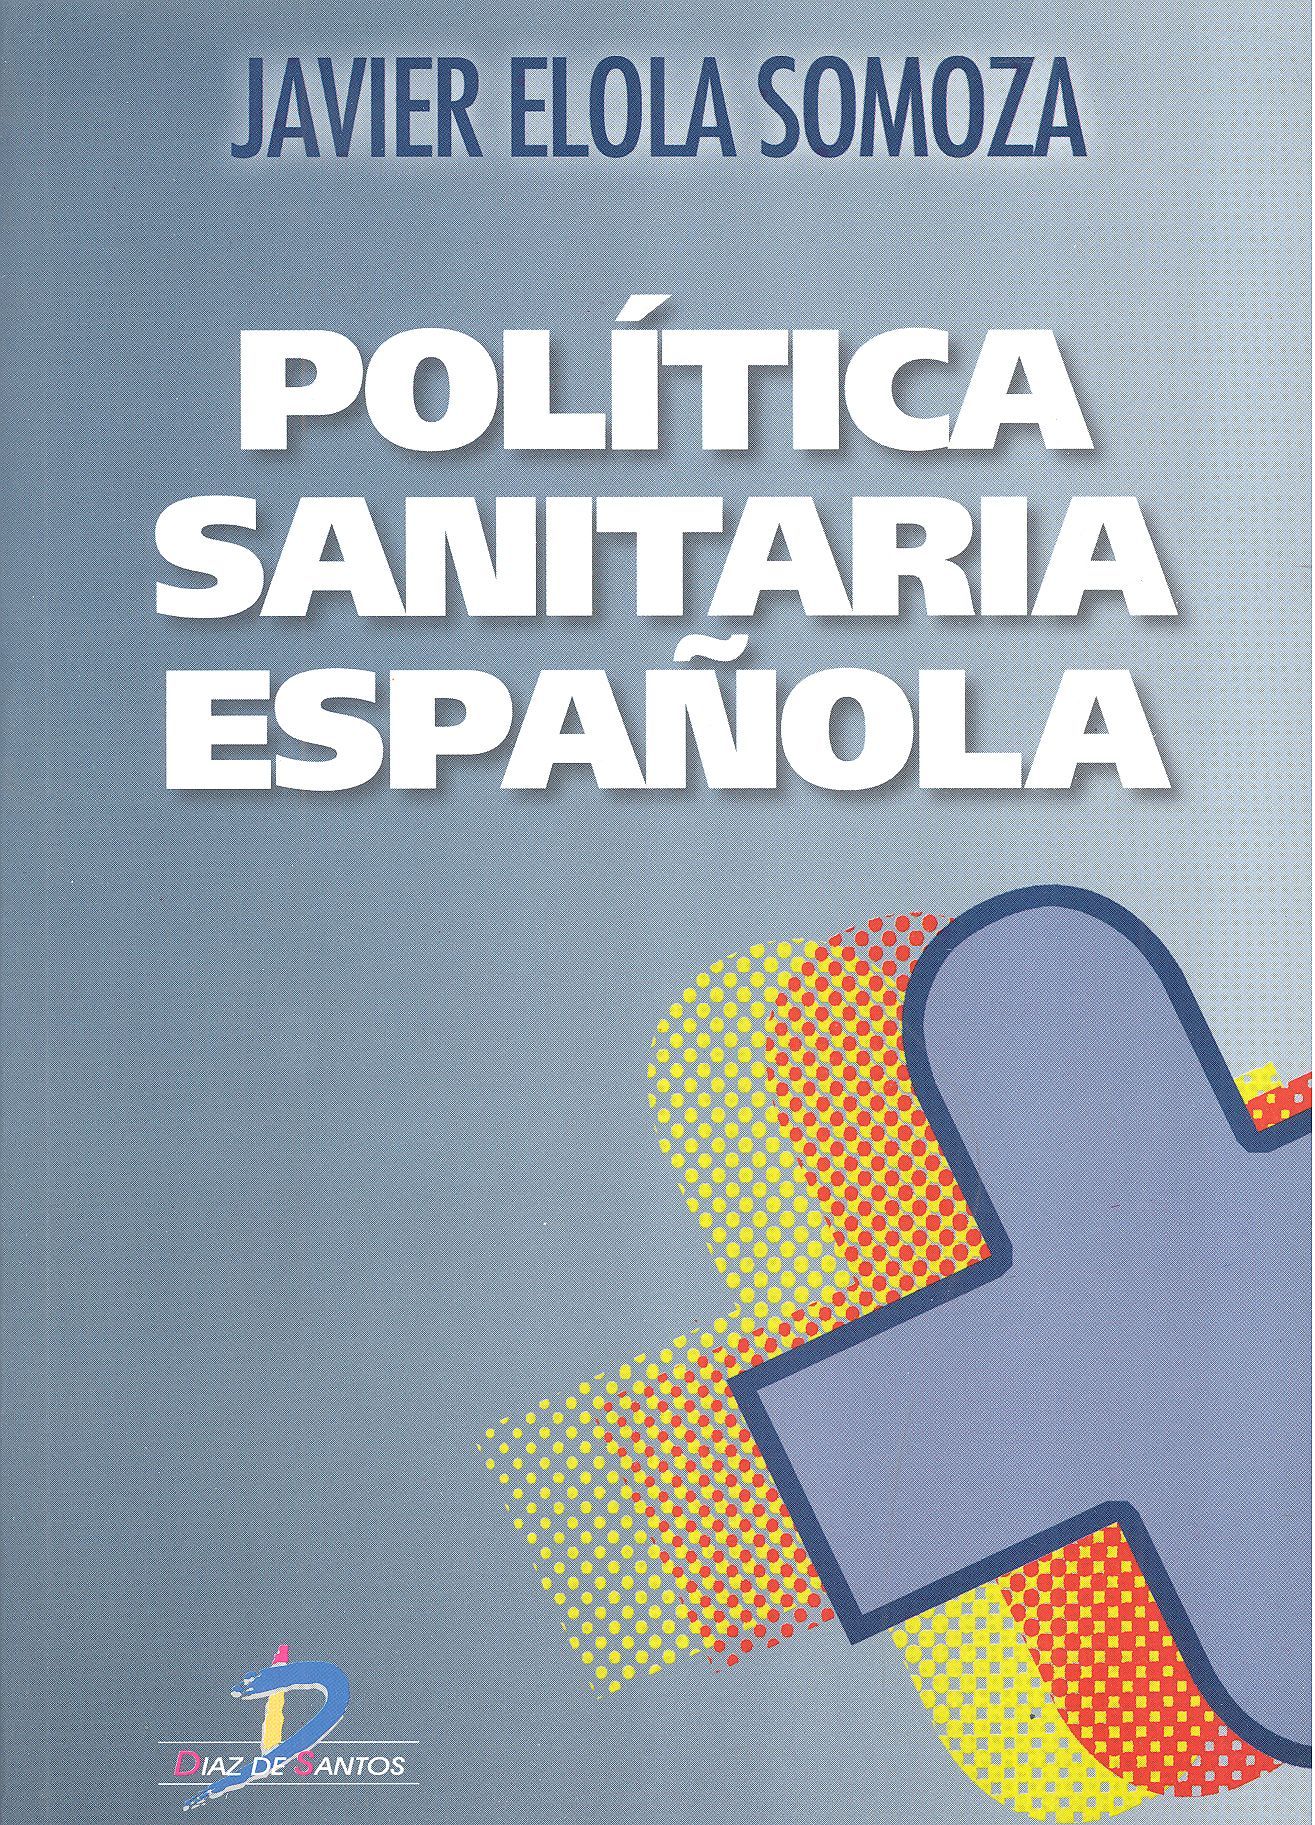 Política Sanitaria Española